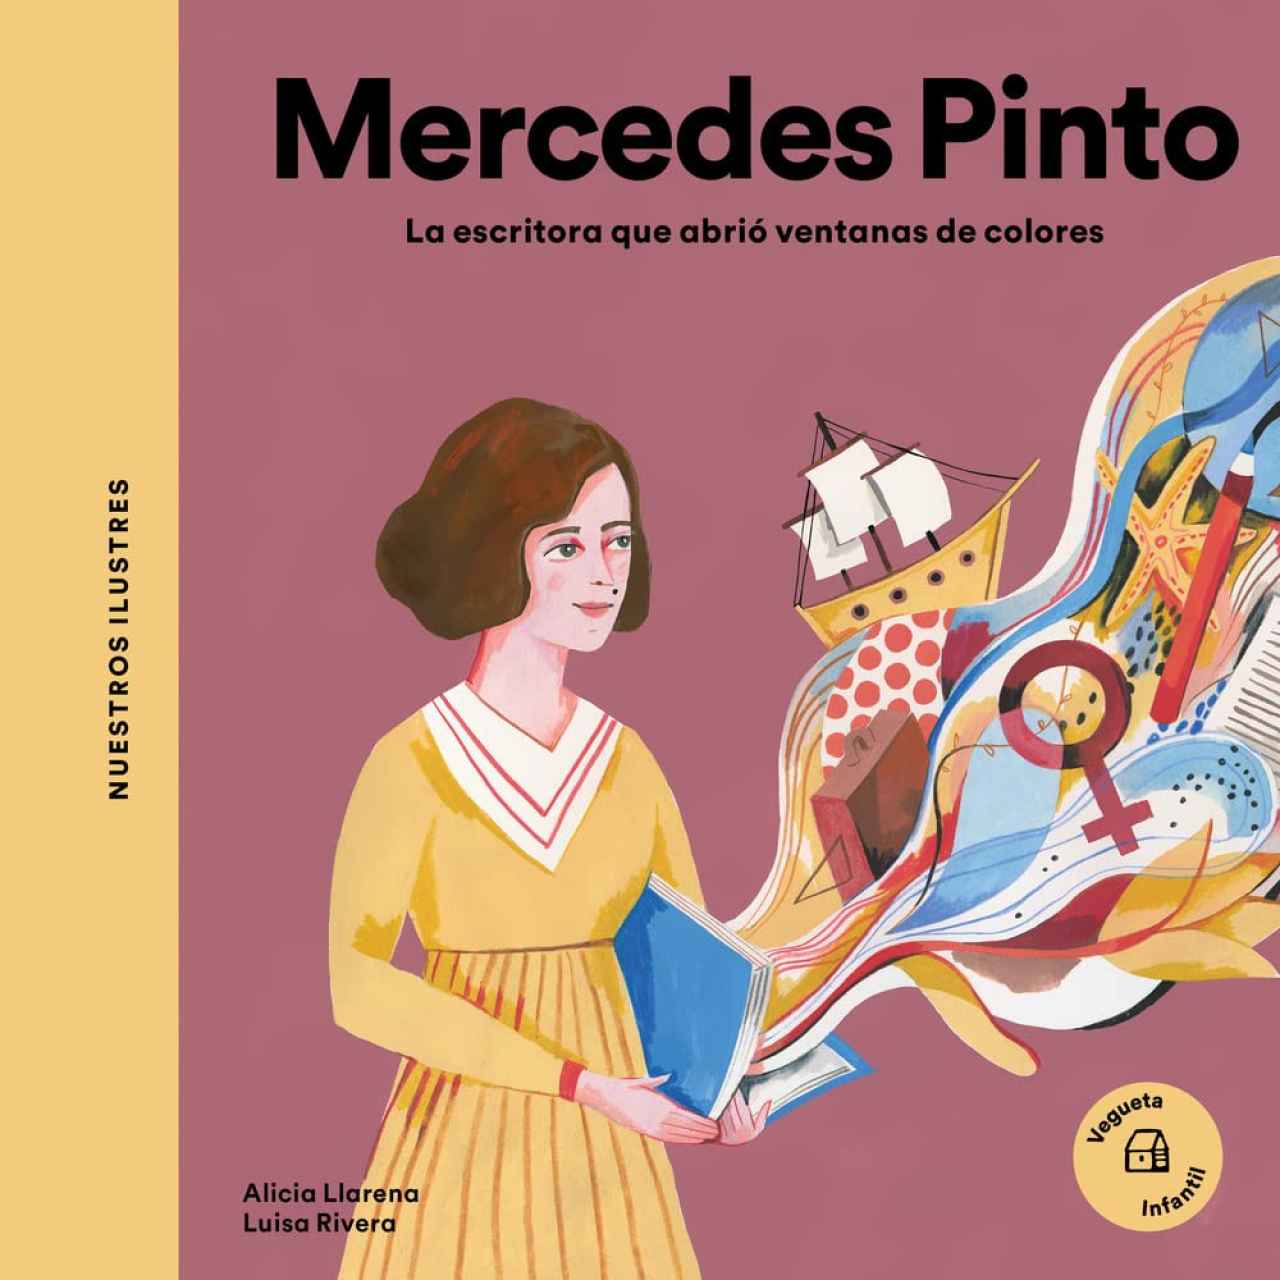 'Mercedes Pinto'